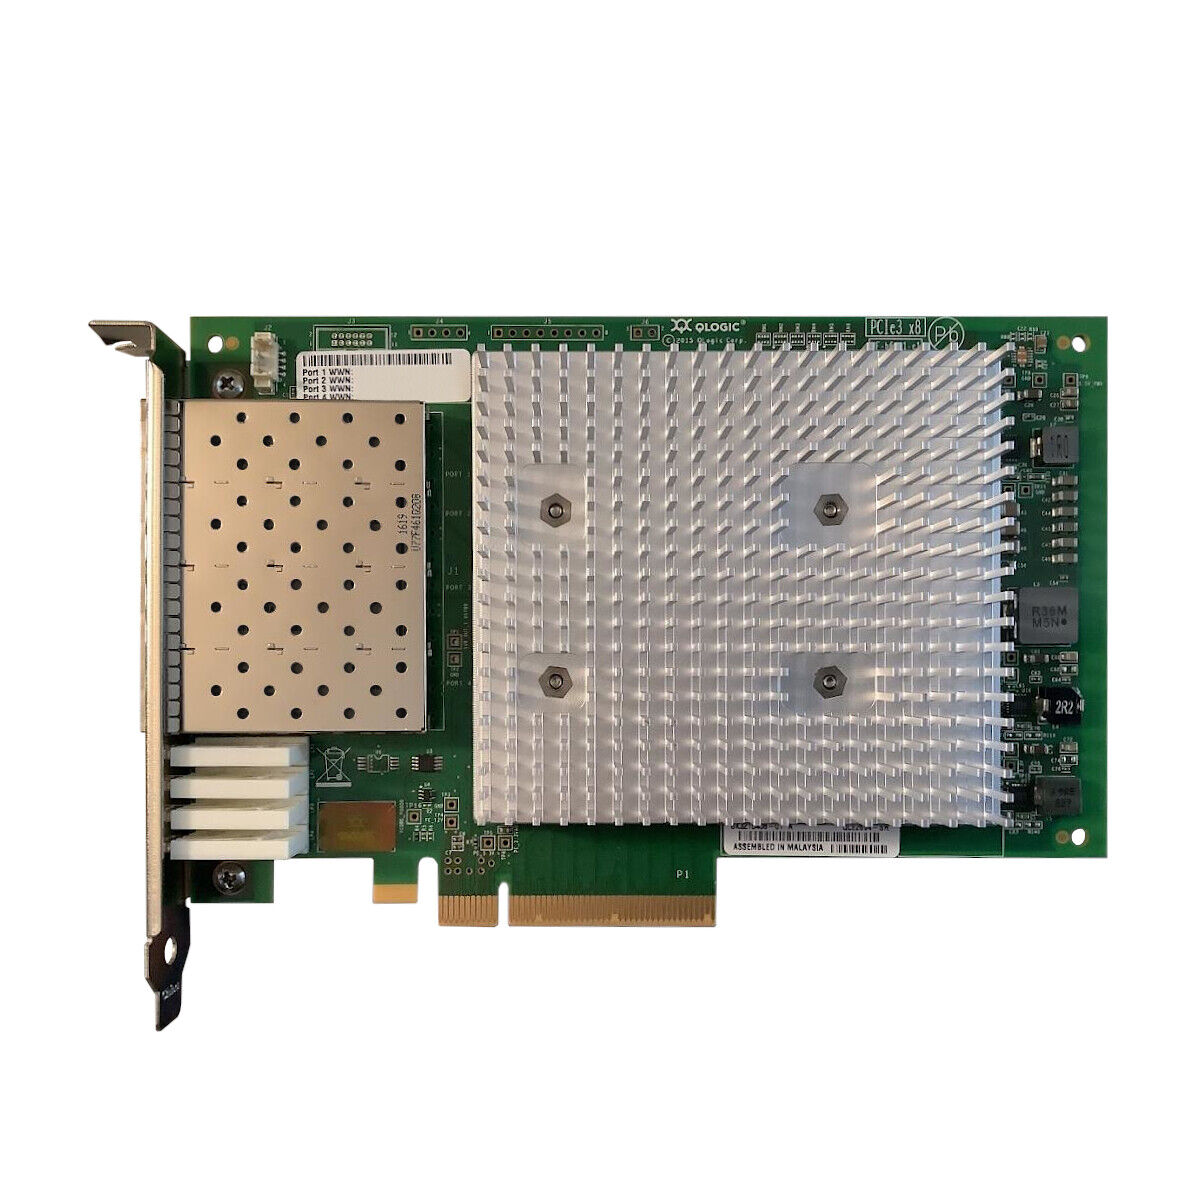 QLogic QLE2694 Quad-Port 16GB Fiber Channel FC PCIe Network Interface Adapter